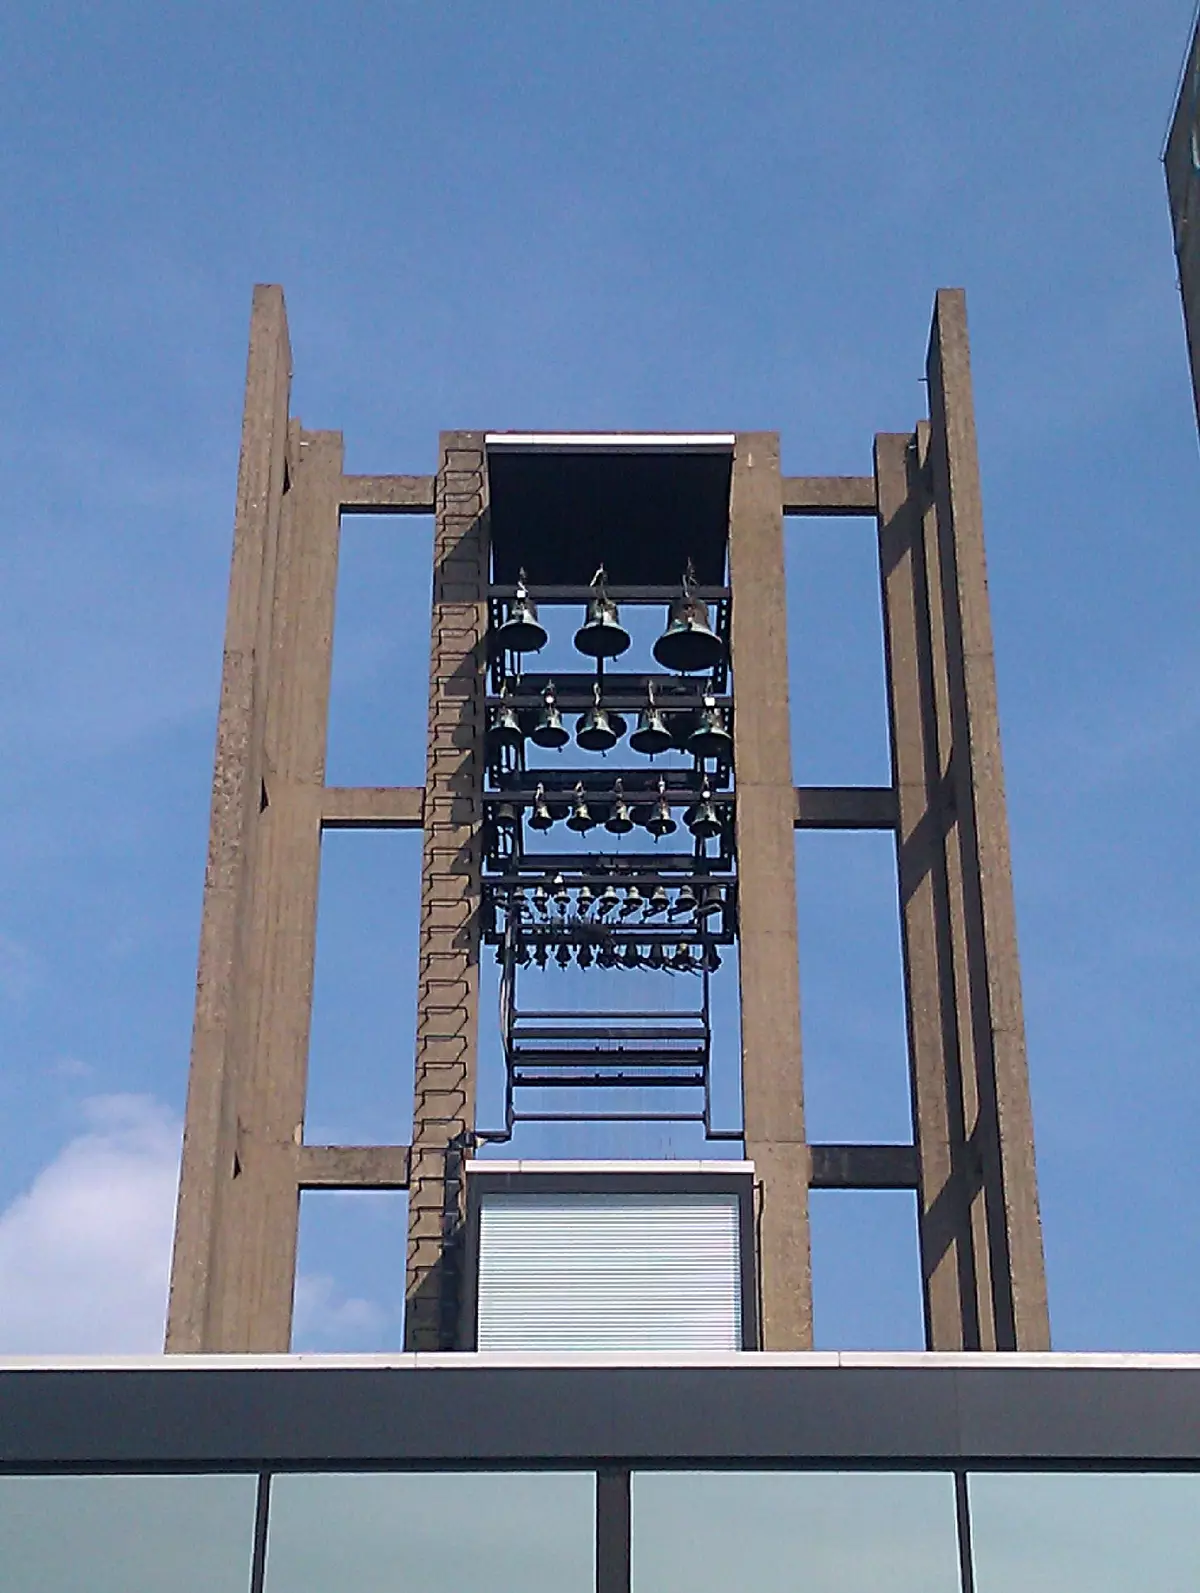 Carillon: მუსიკალური ინსტრუმენტი პეტრე და პოლ ტაძარი, Carillons in Kondopoga და Belgorod, სხვა ადგილებში რუსეთში 26198_14